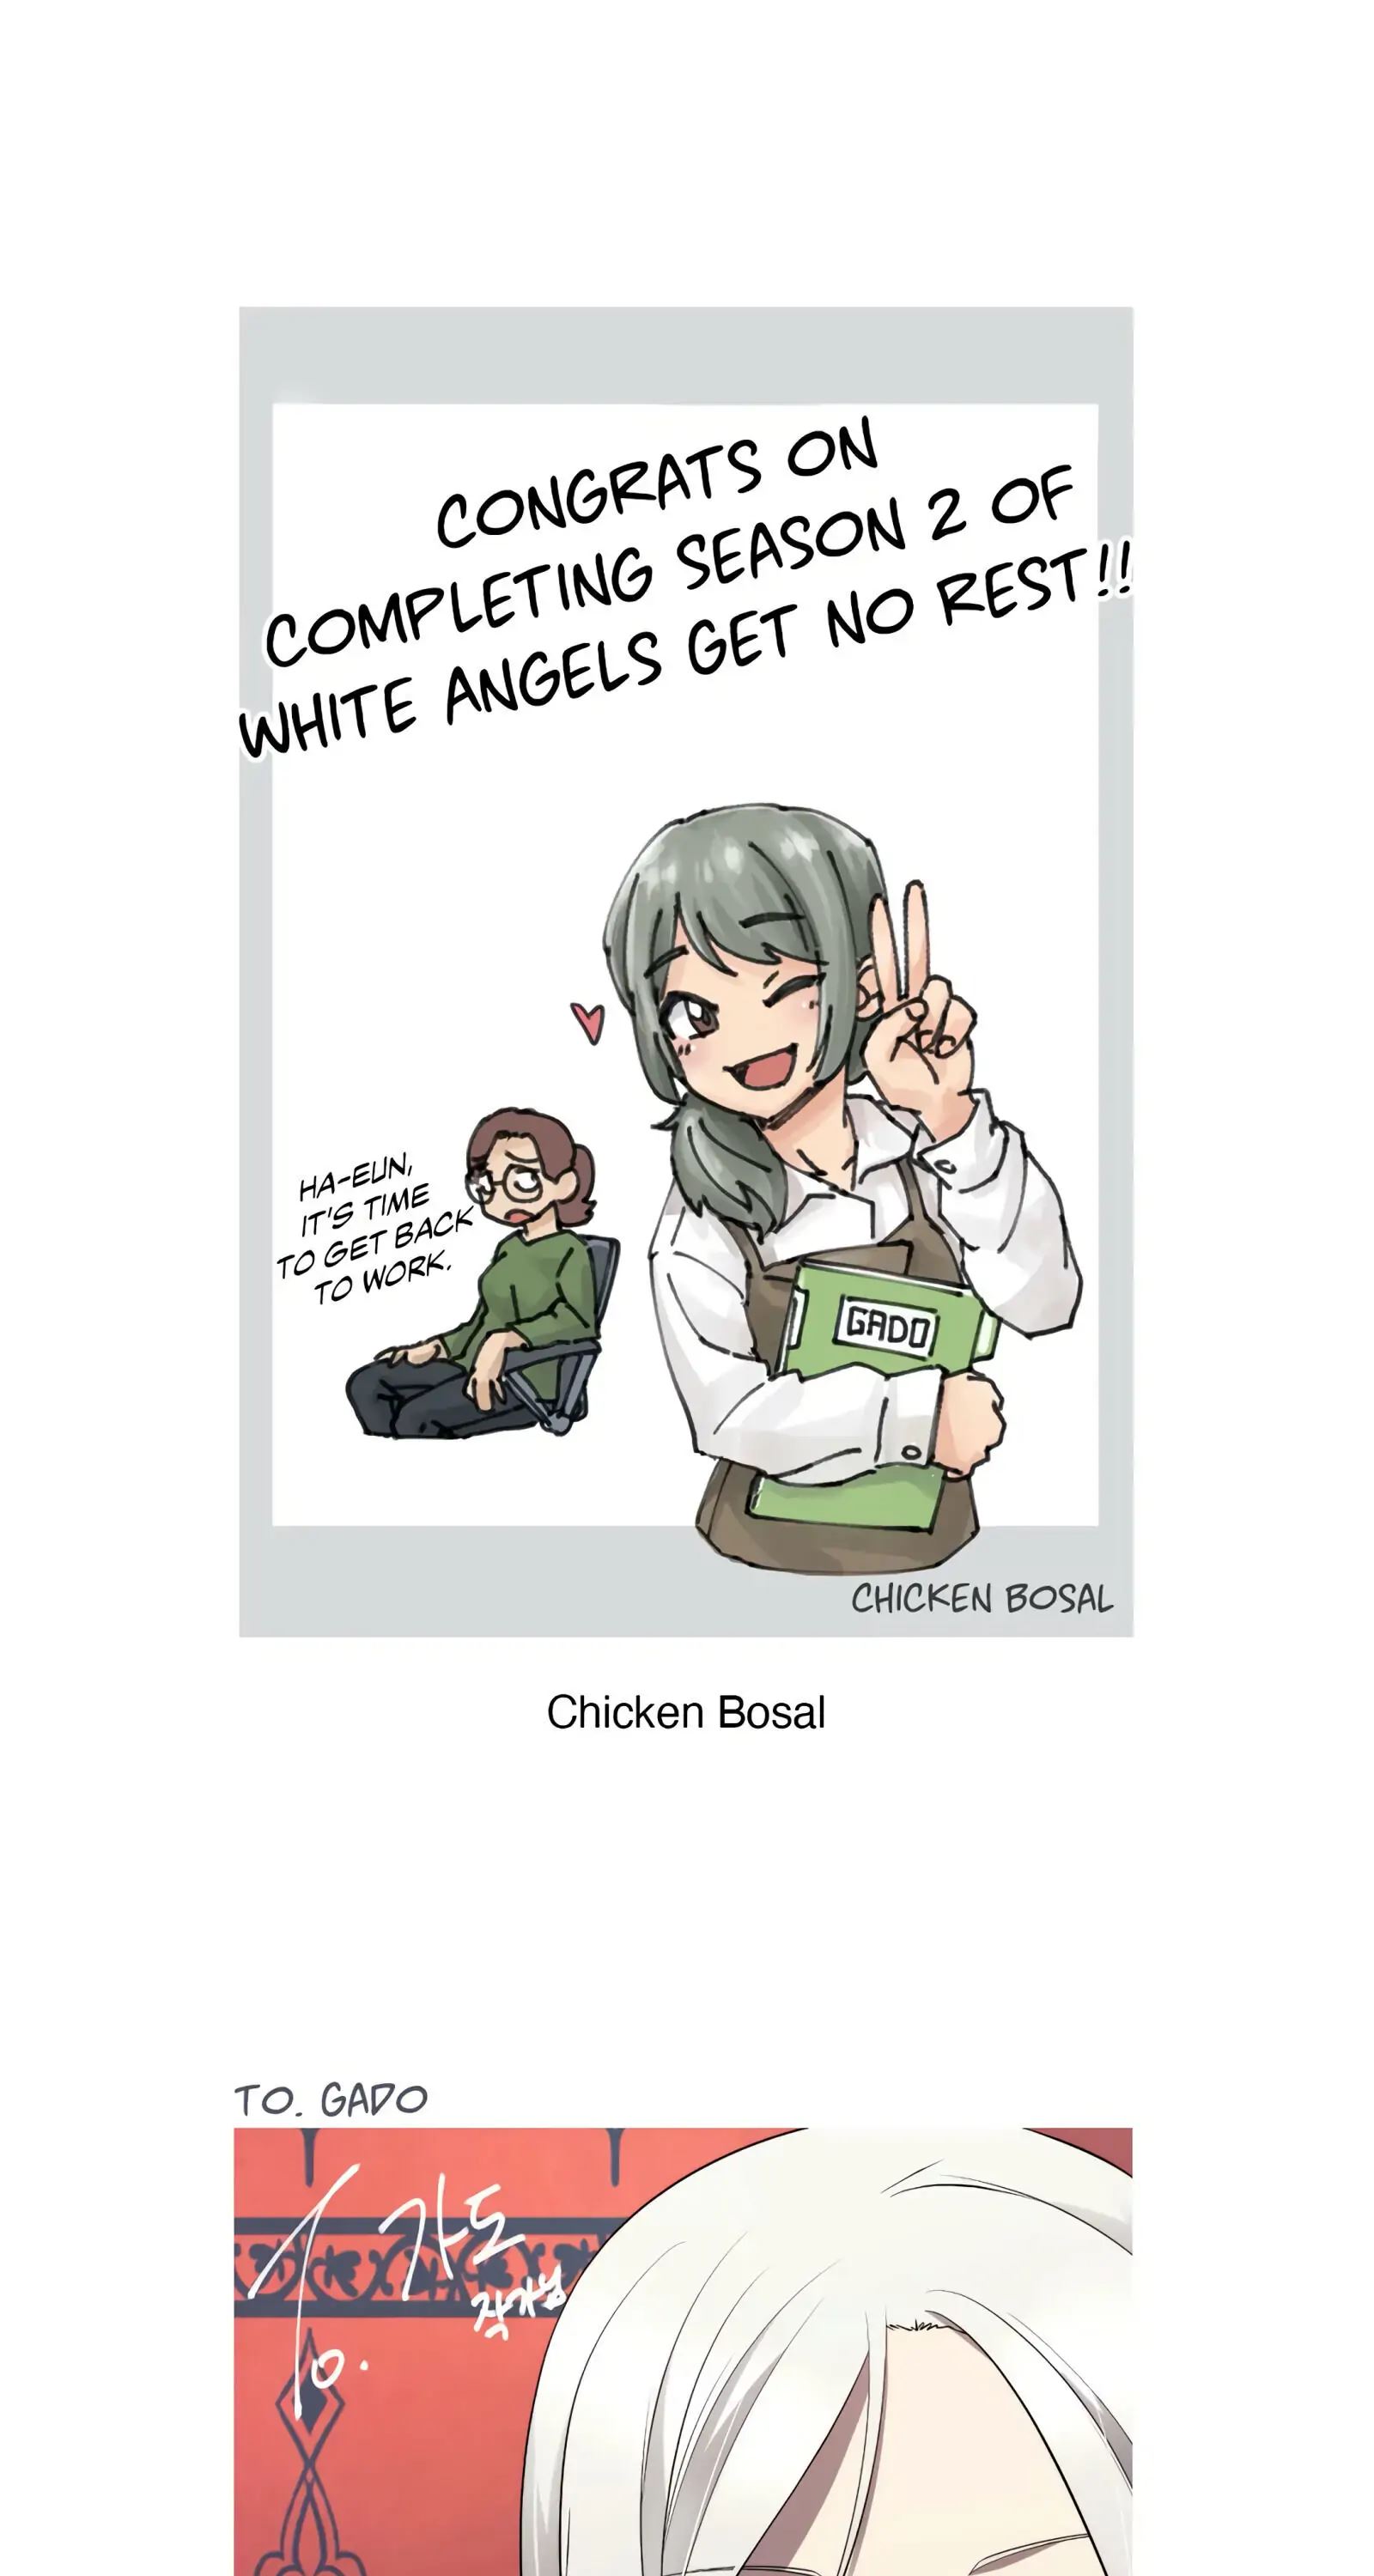 White Angels Get No Rest END image